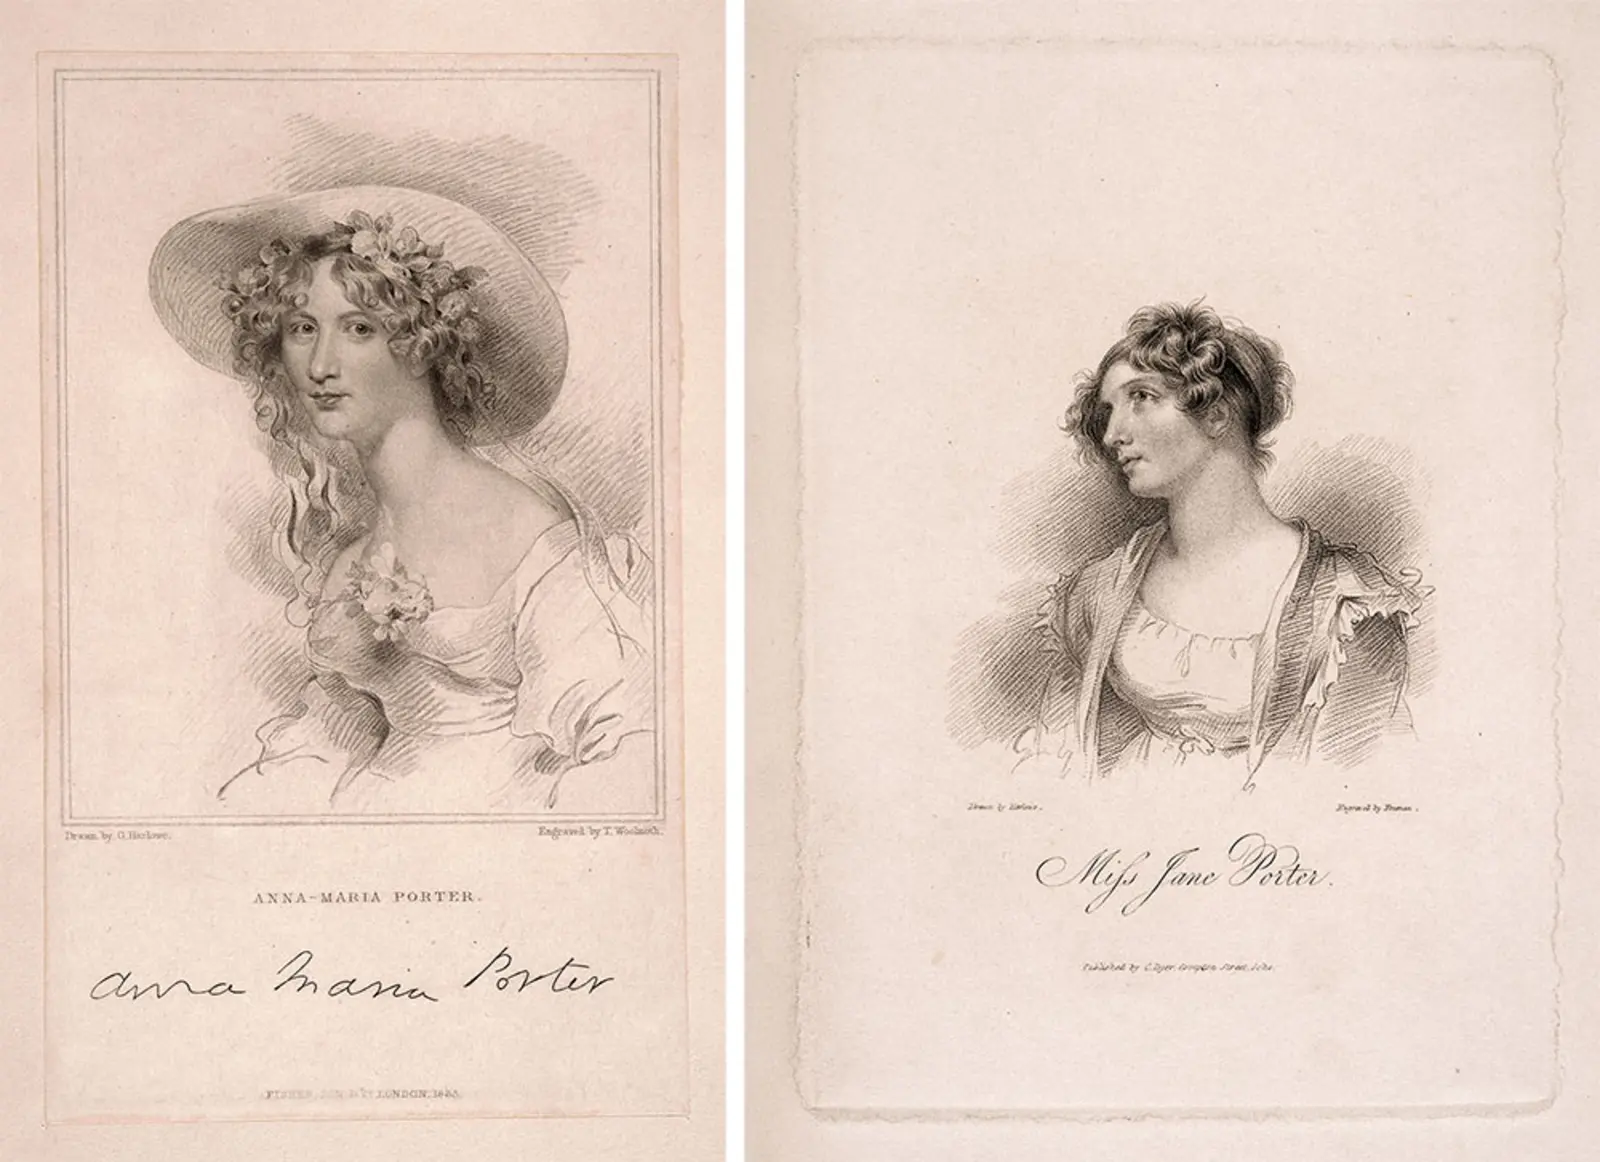 The Porter sisters. Left: Anna Maria Porter. Right: Jane Porter.